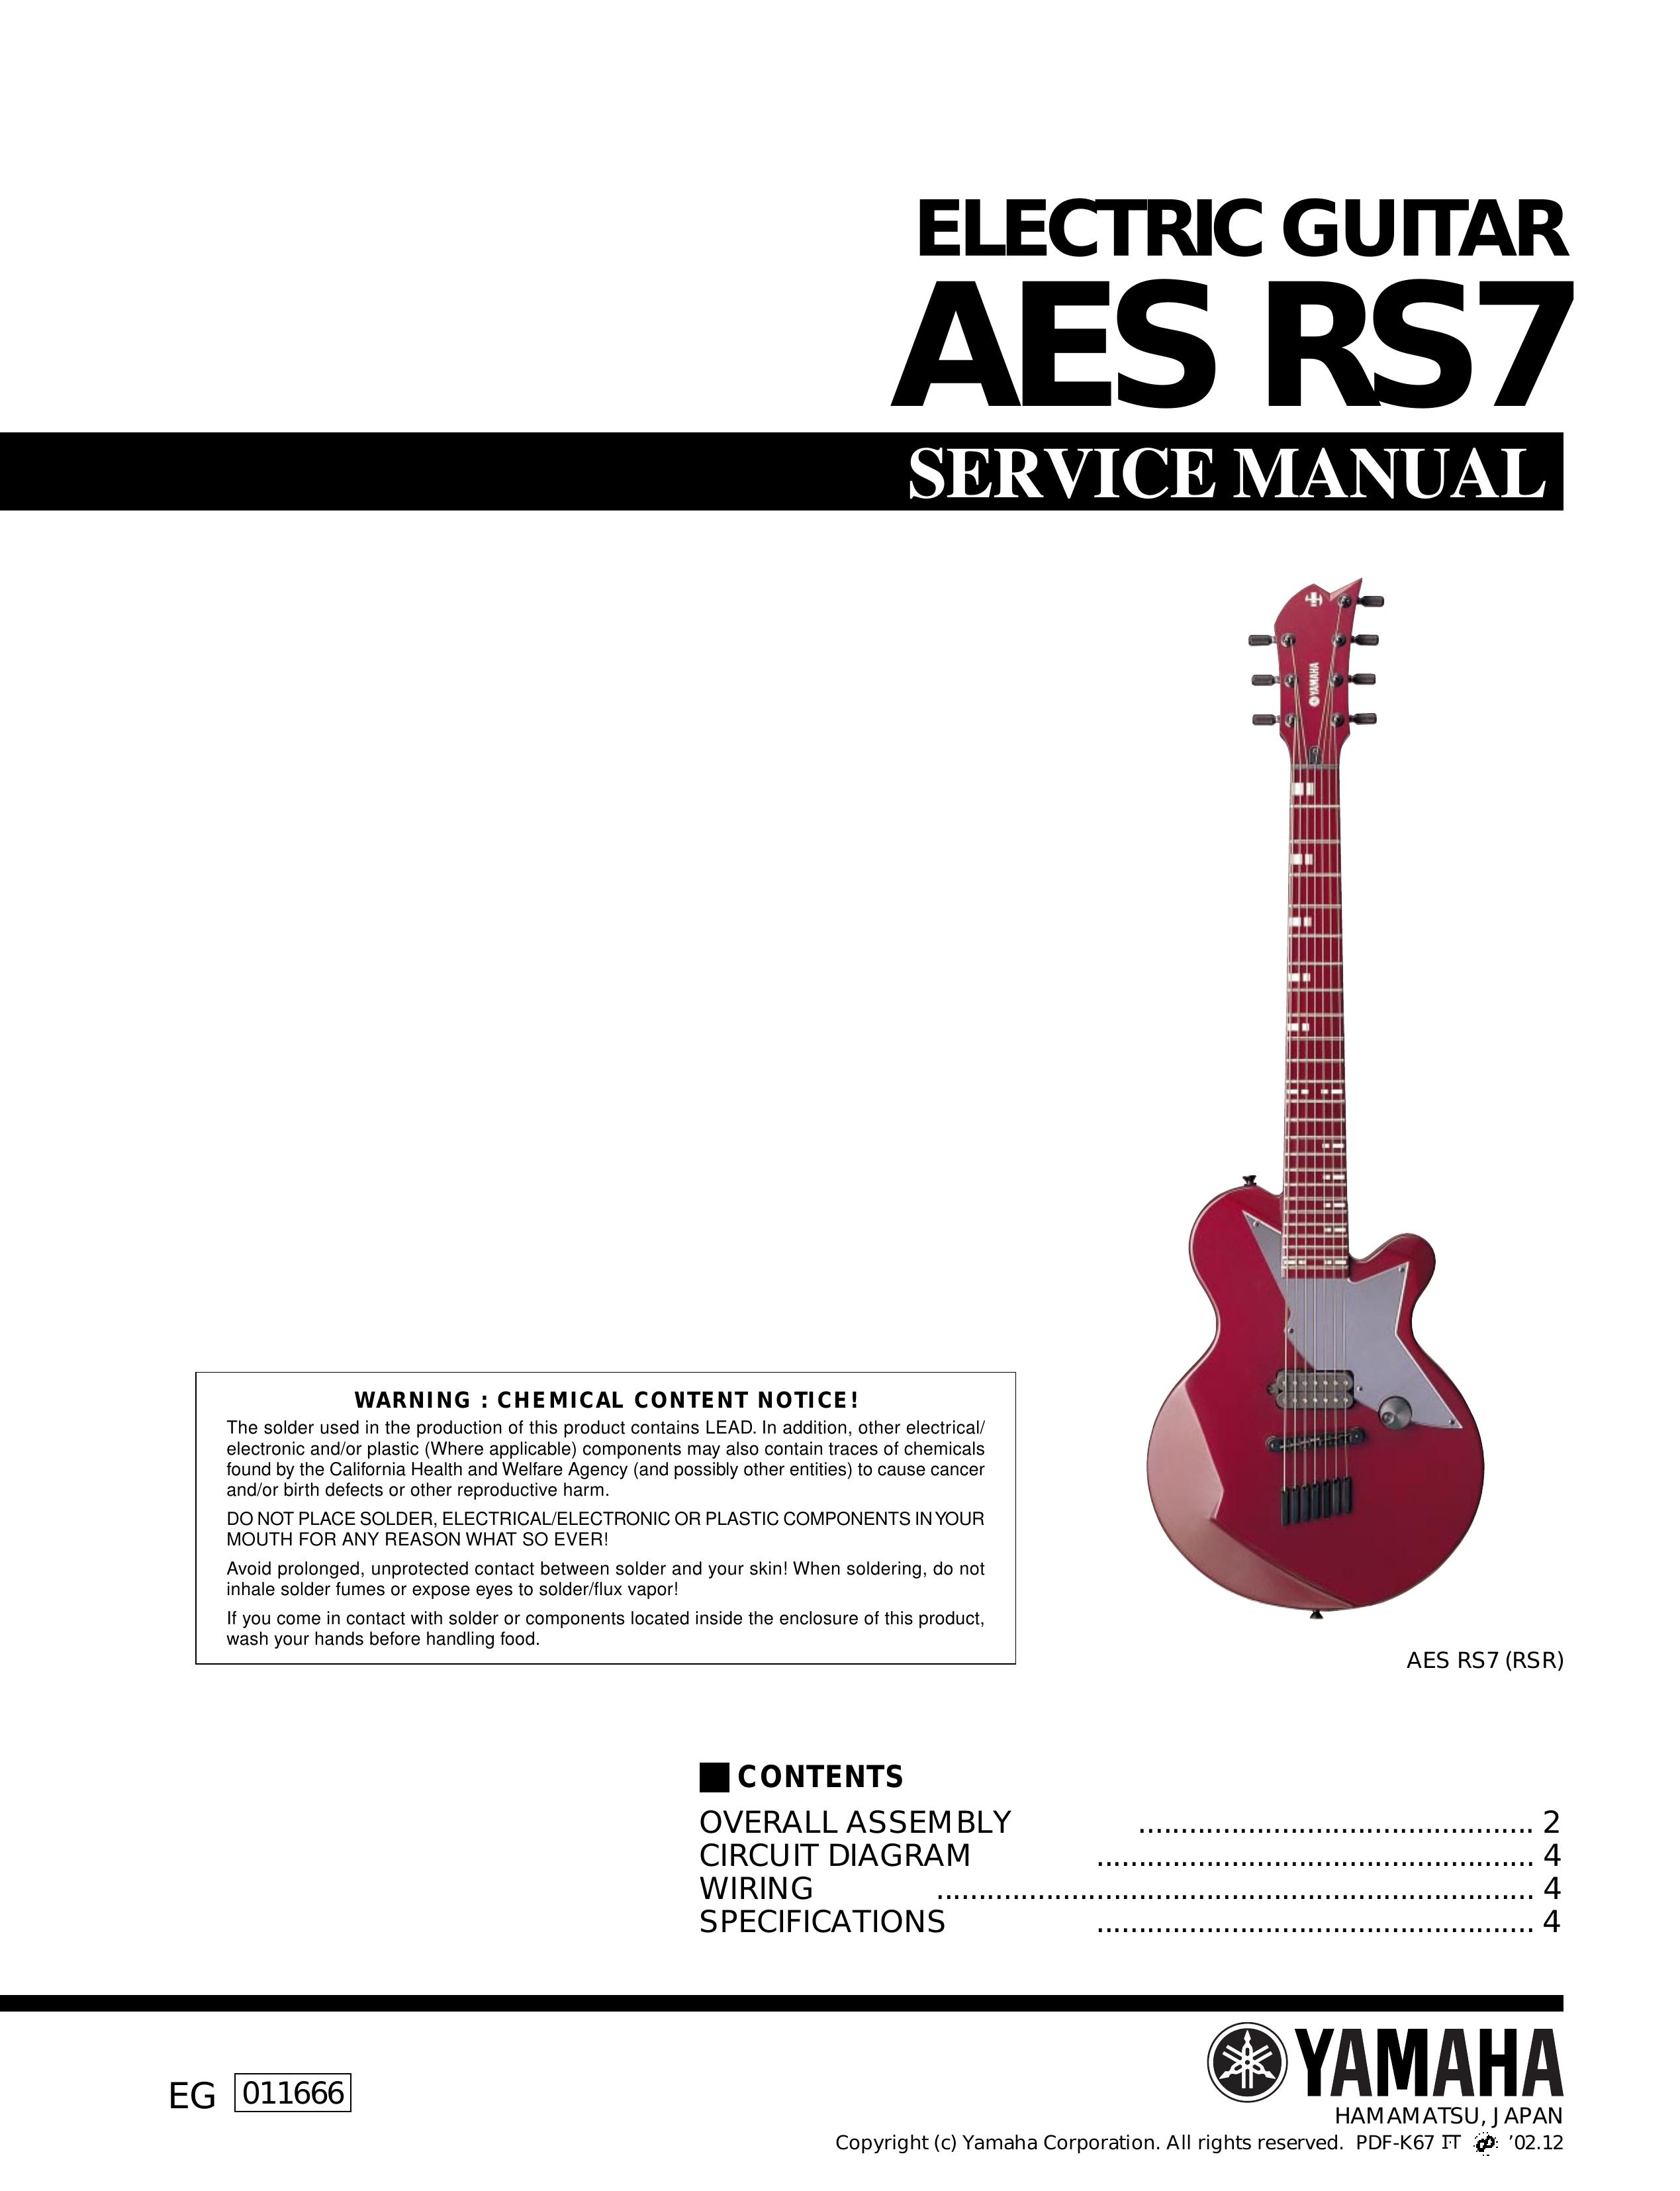 Yamaha AES RS7 Guitar User Manual